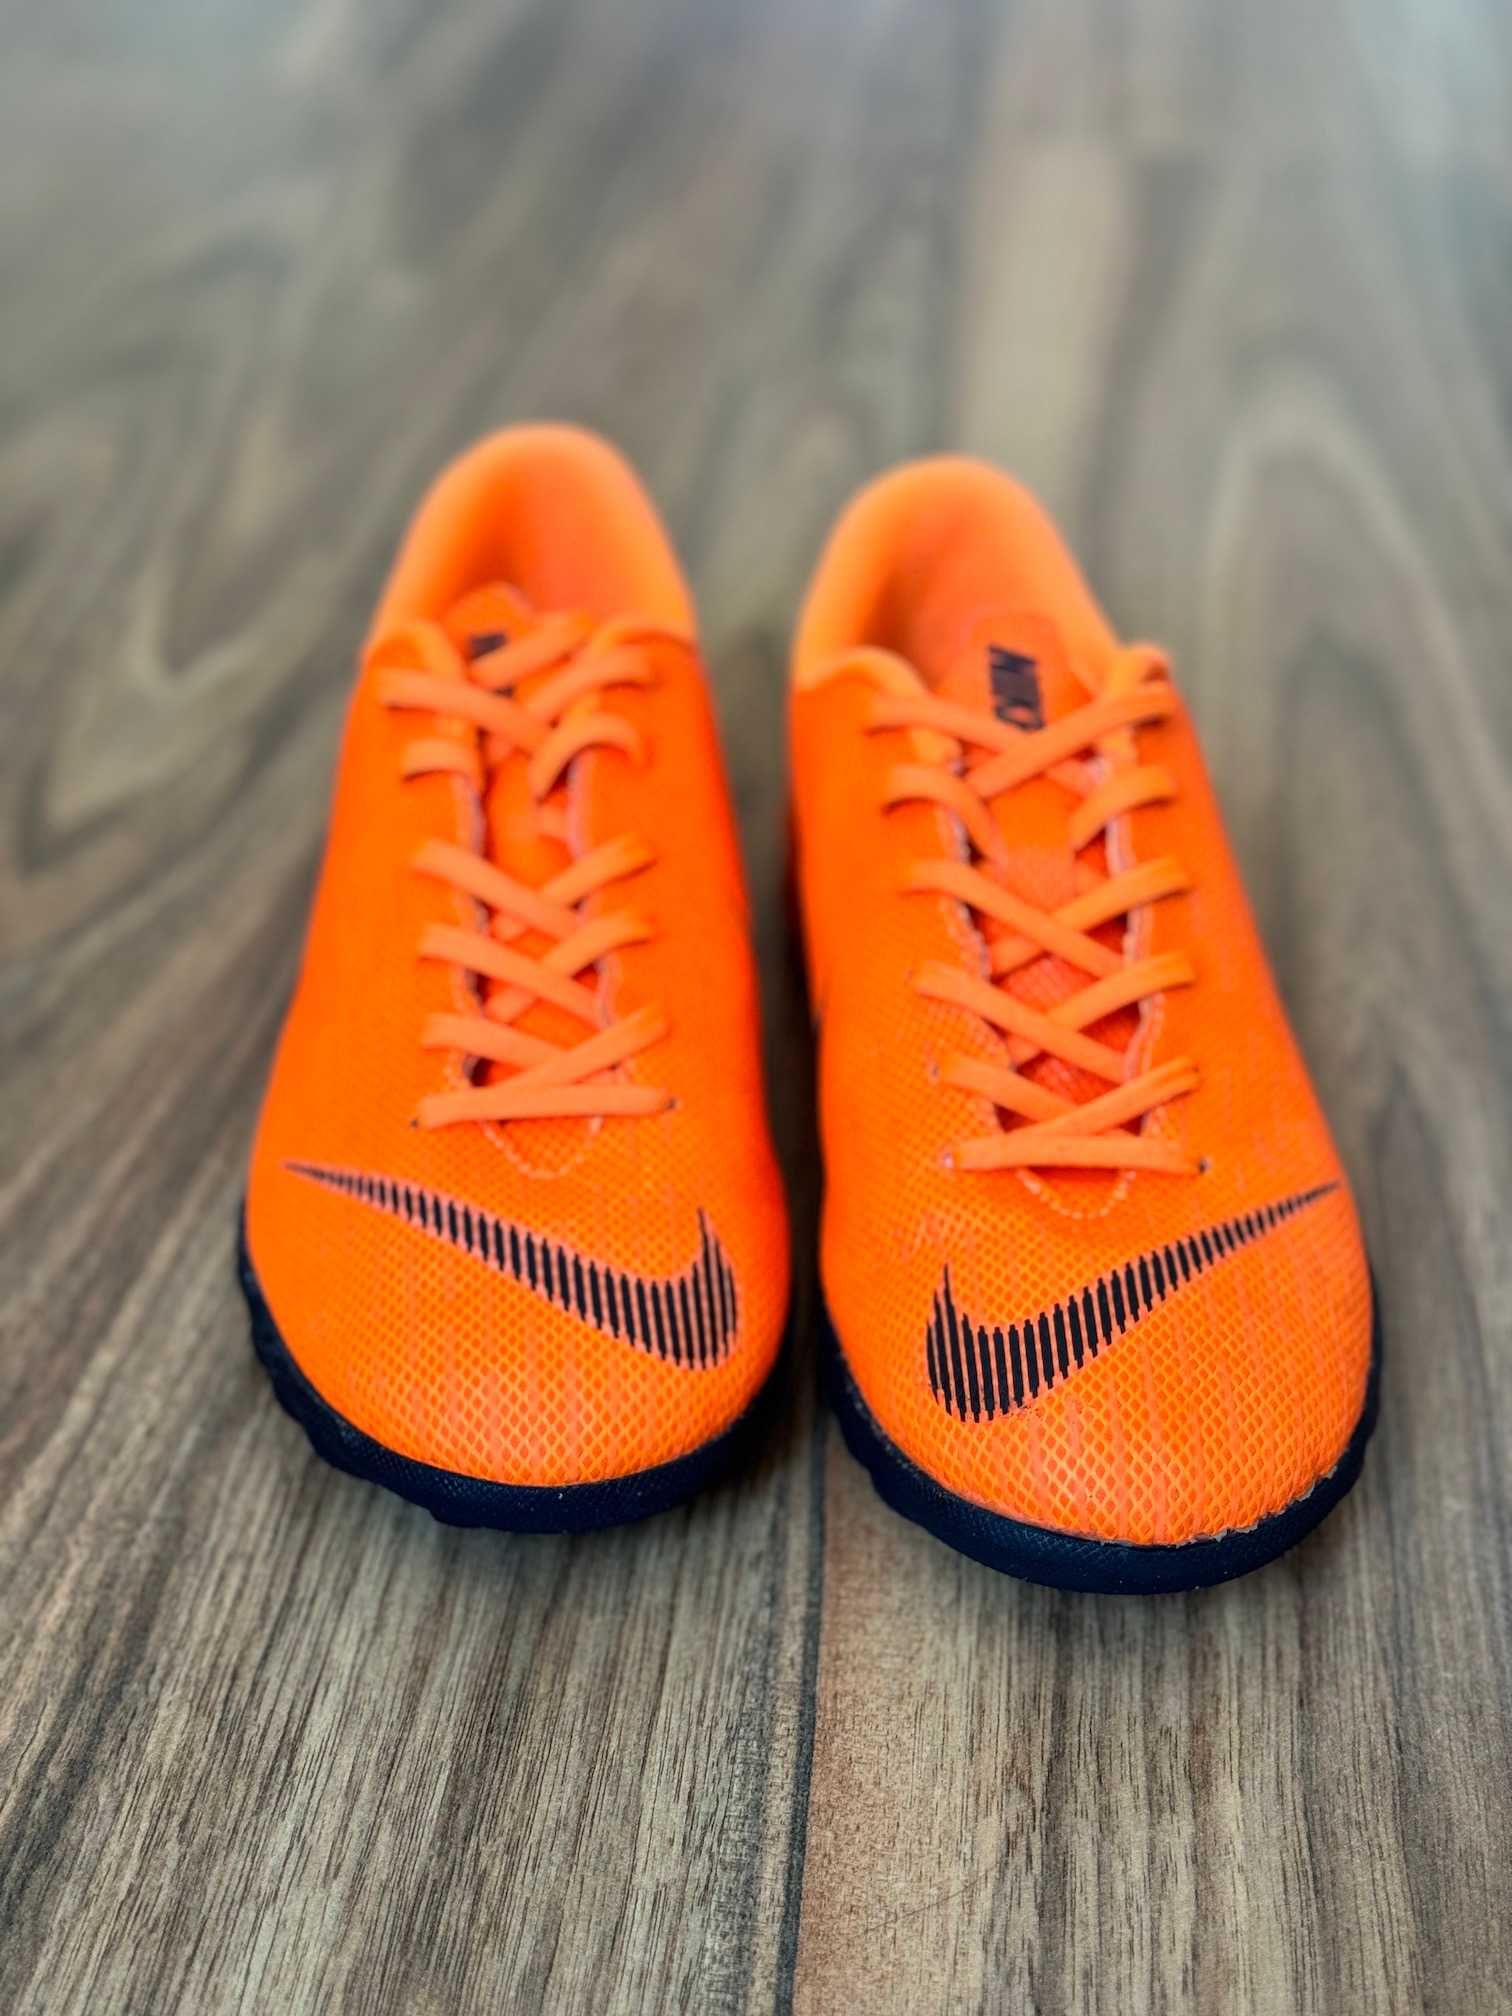 Adidasi / ghete fotbal baieti Nike- 36- foarte bine intretinuti